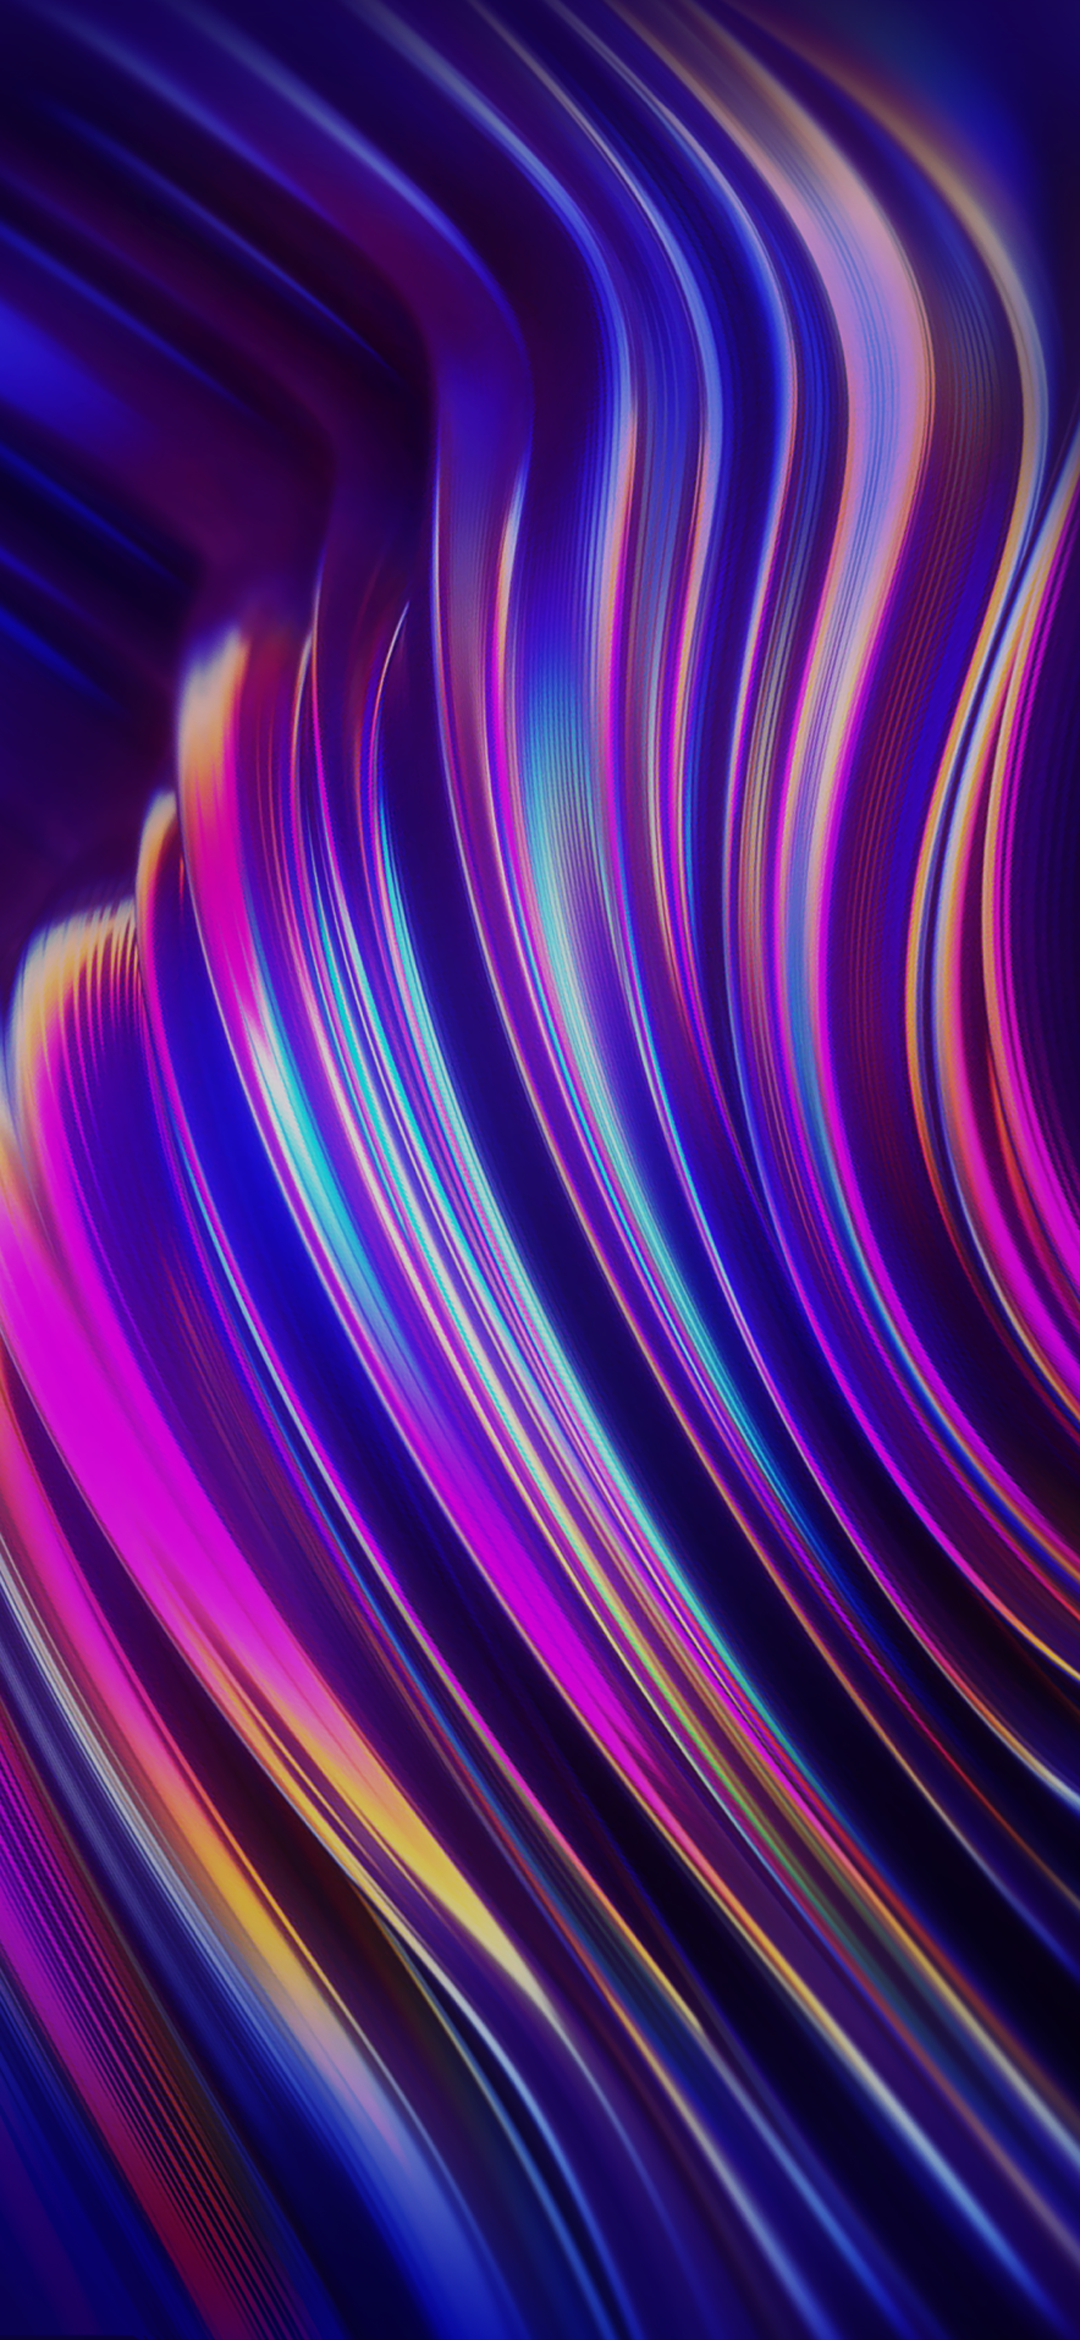 descarga de fondos de pantalla,púrpura,violeta,azul,ligero,ola